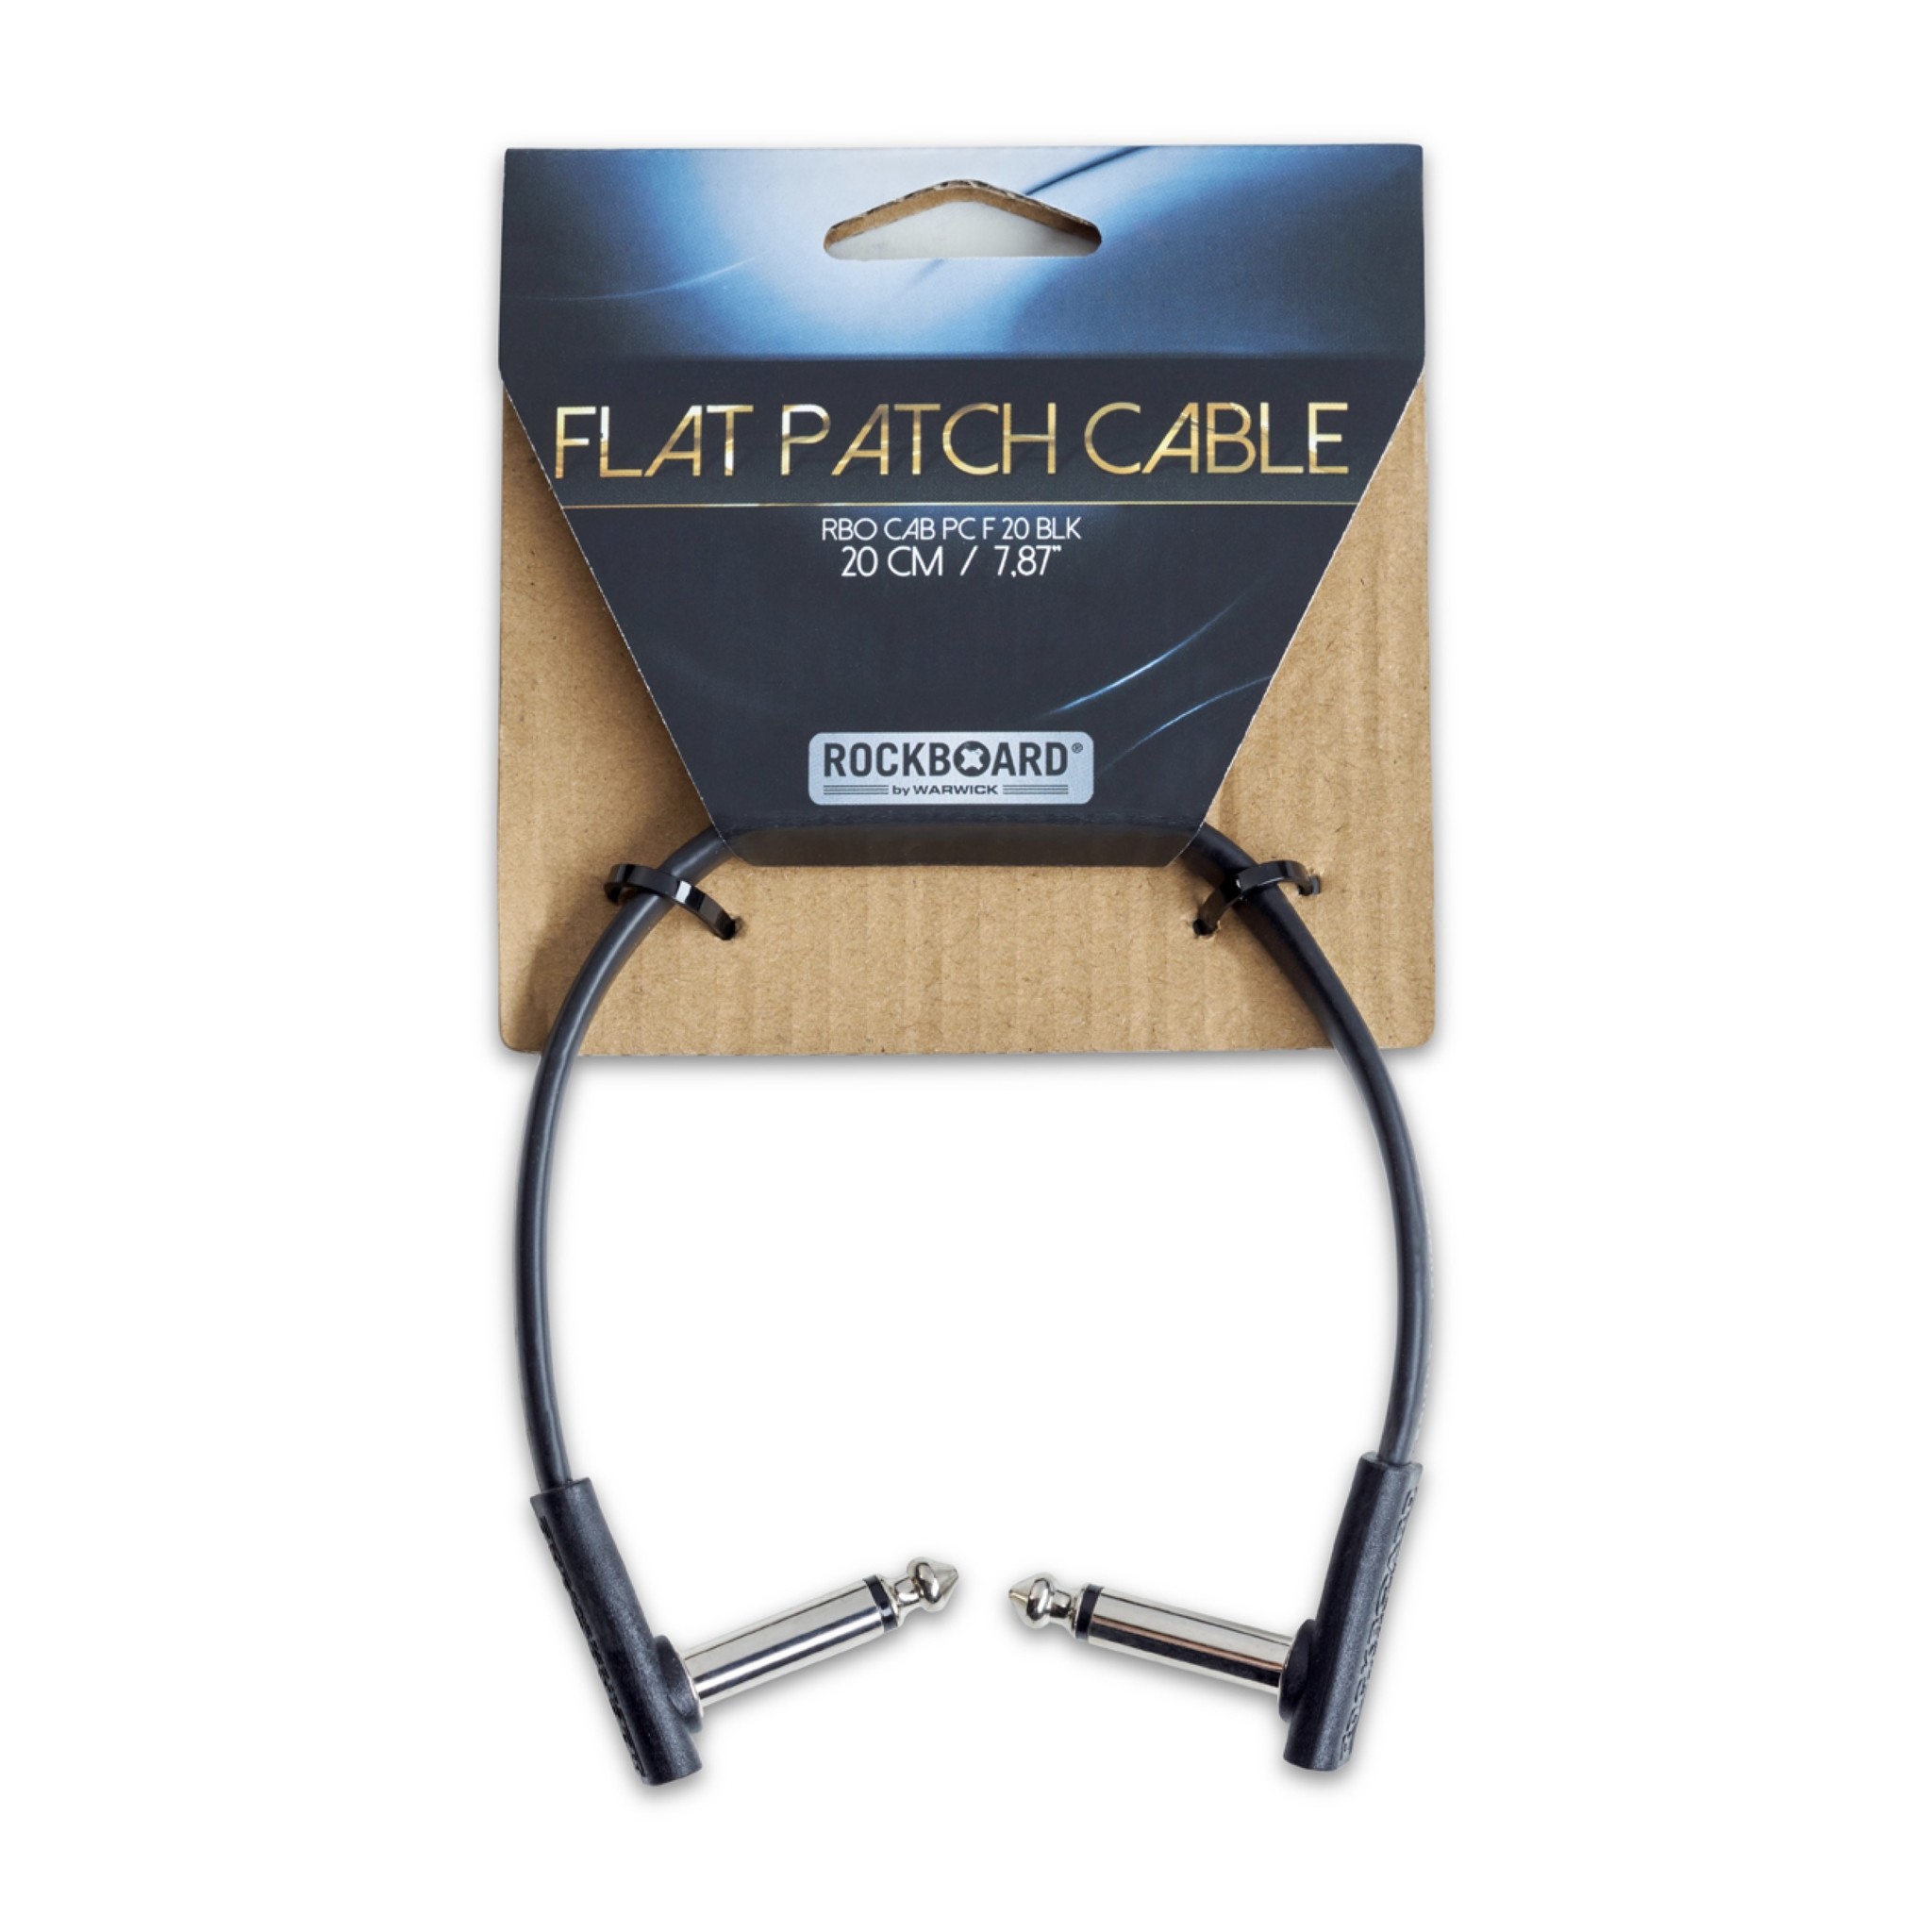 RockBoard Flat Patch Cable, Black, 20 cm (7.87"), low profile